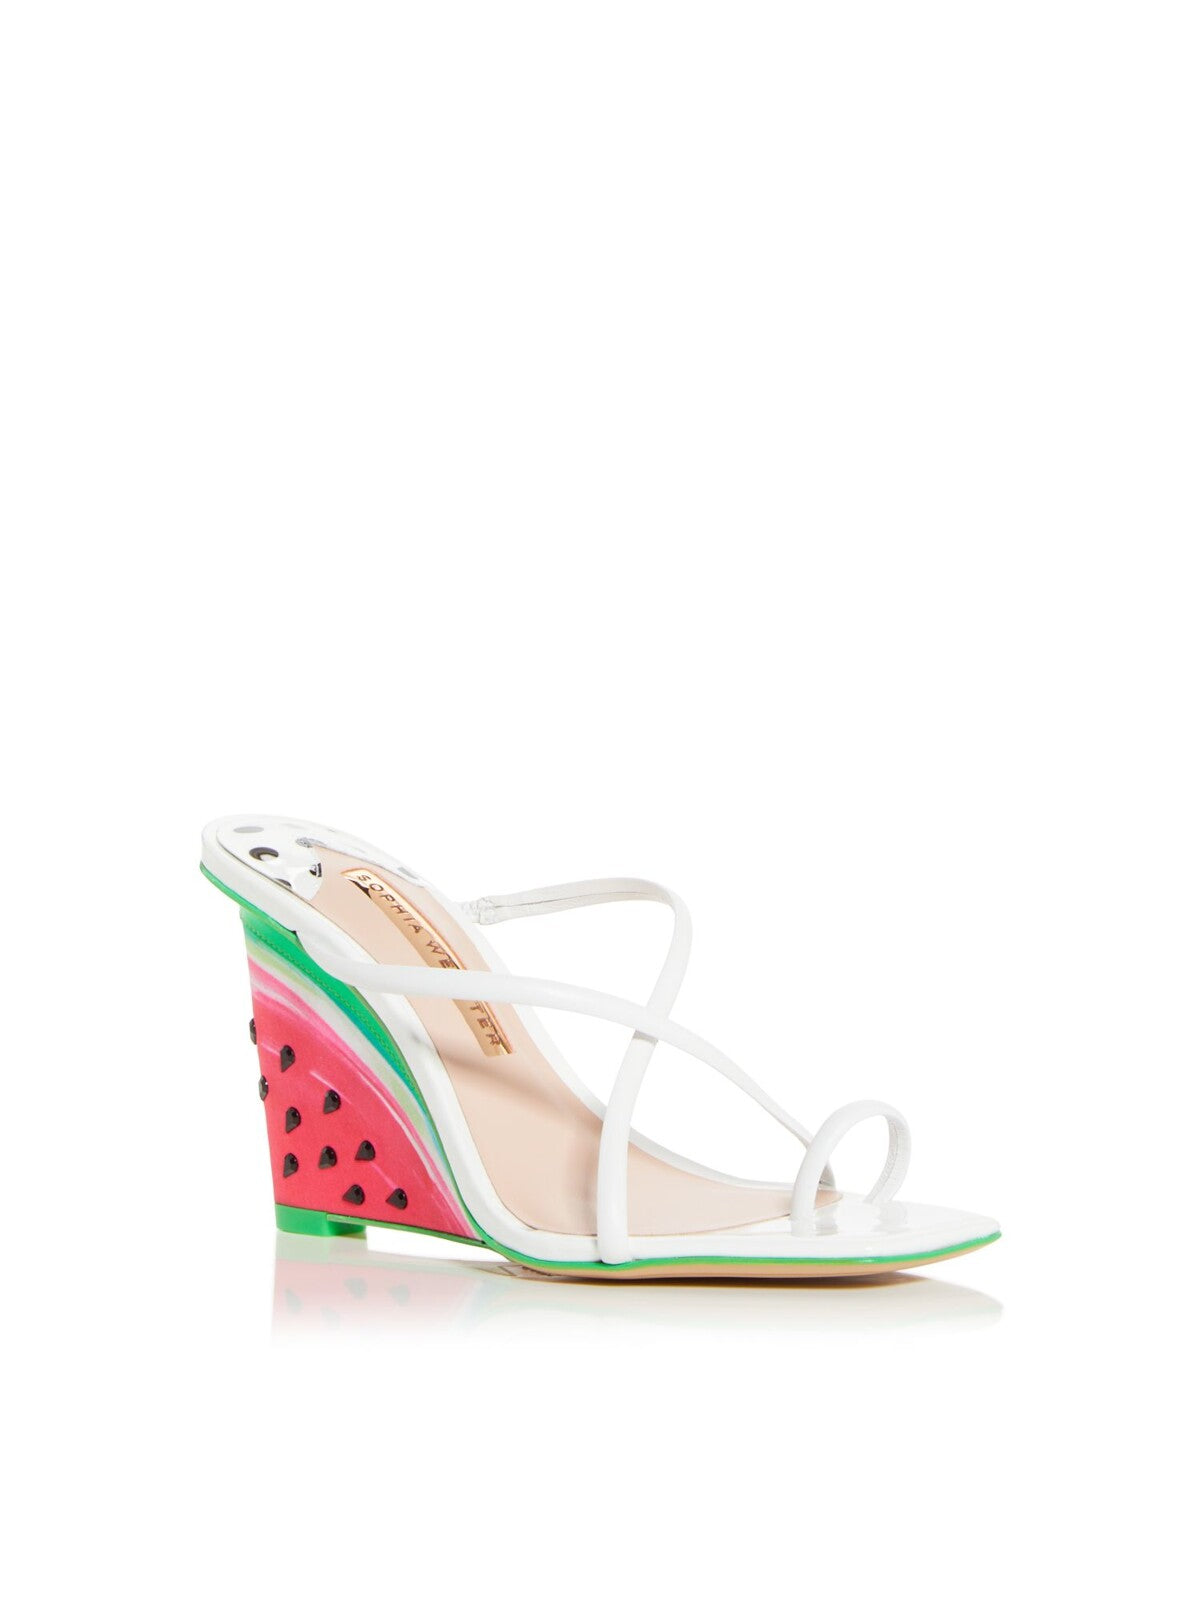 SOPHIA WEBSTER Womens White Watermelon Embellished Brooke Square Toe Wedge Slip On Leather Heeled Sandal 37